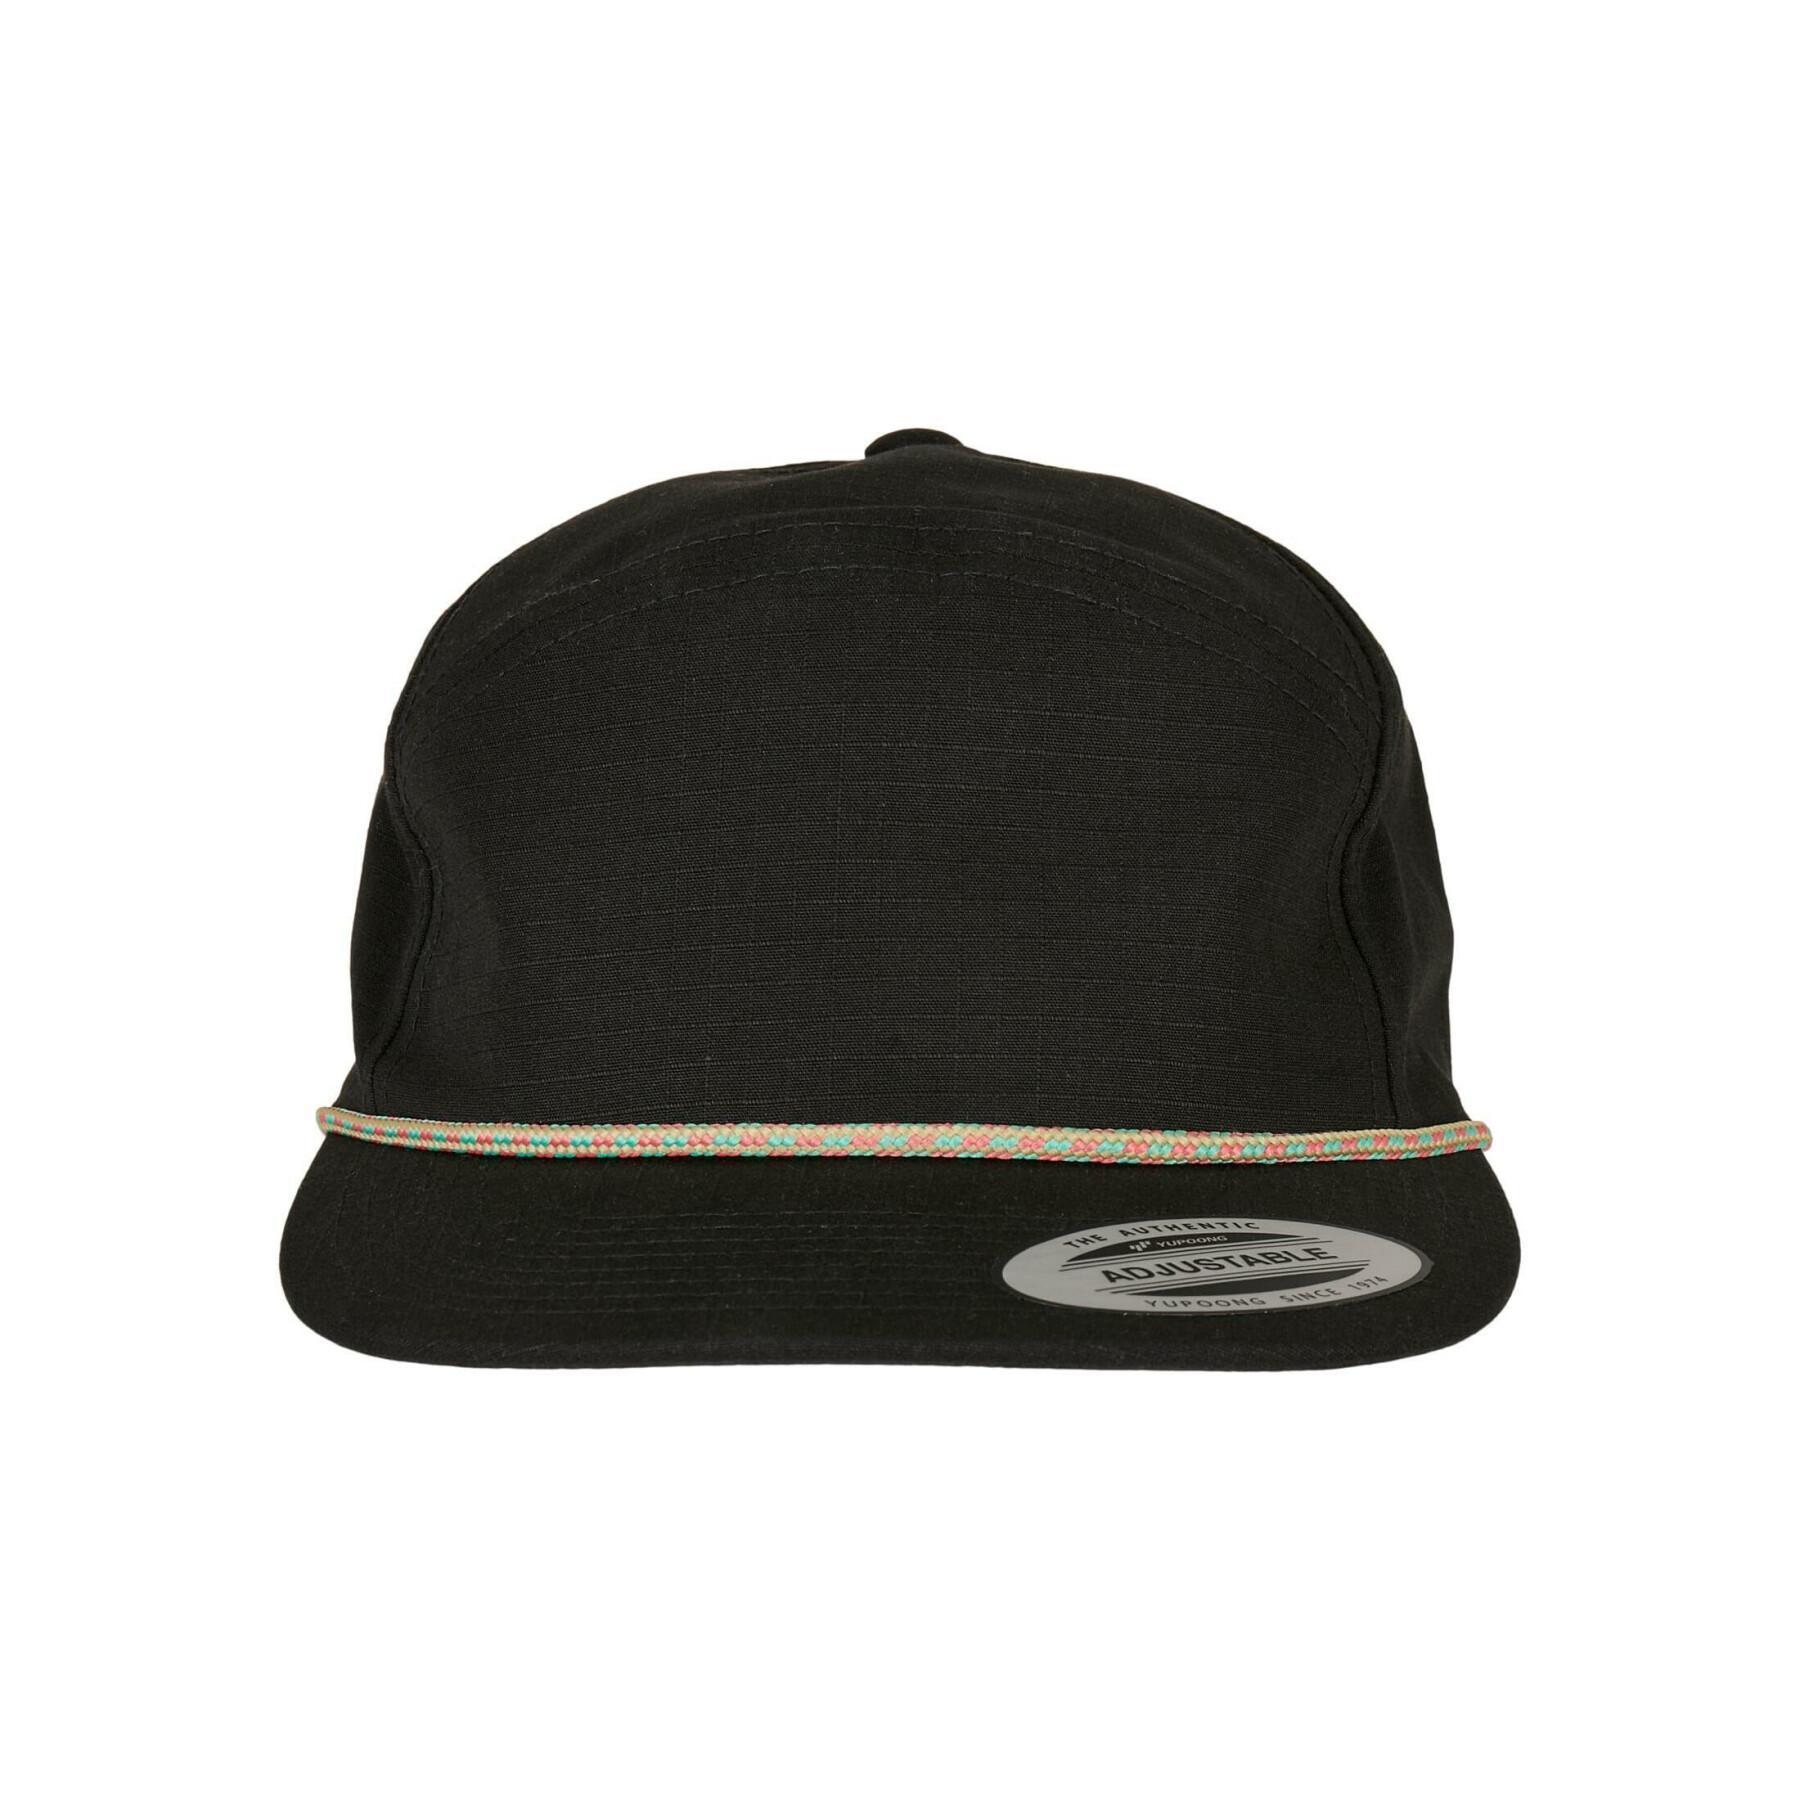 Cap Flexfit Color Braid Jockey - Snapbacks - Headwear - Accessories | Flex Caps